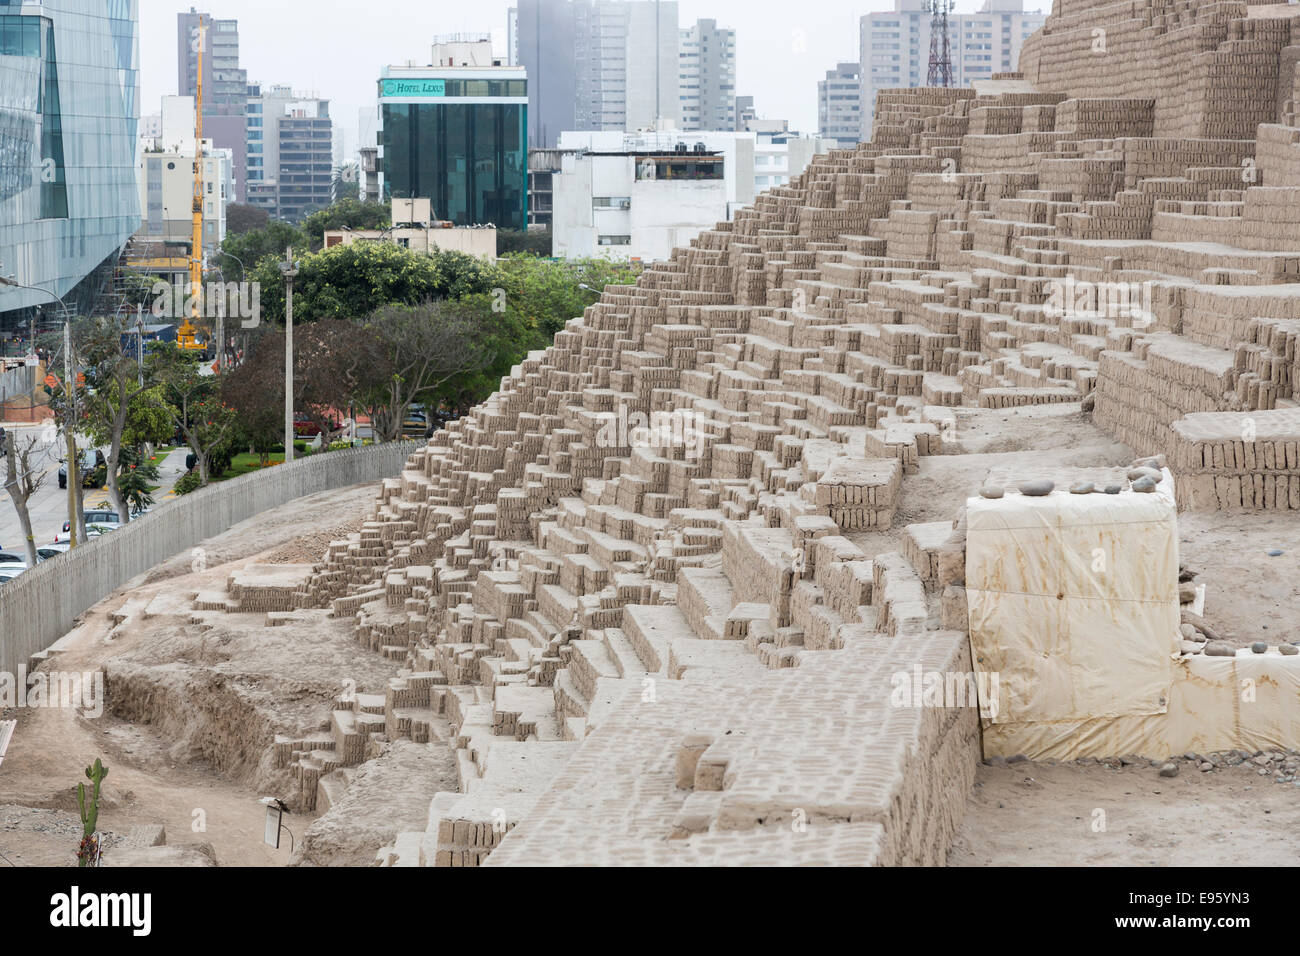 Pyramid at Huaca Pucllana or Huaca Juliana, with modern Miraflores in the background, Lima, Peru Stock Photo